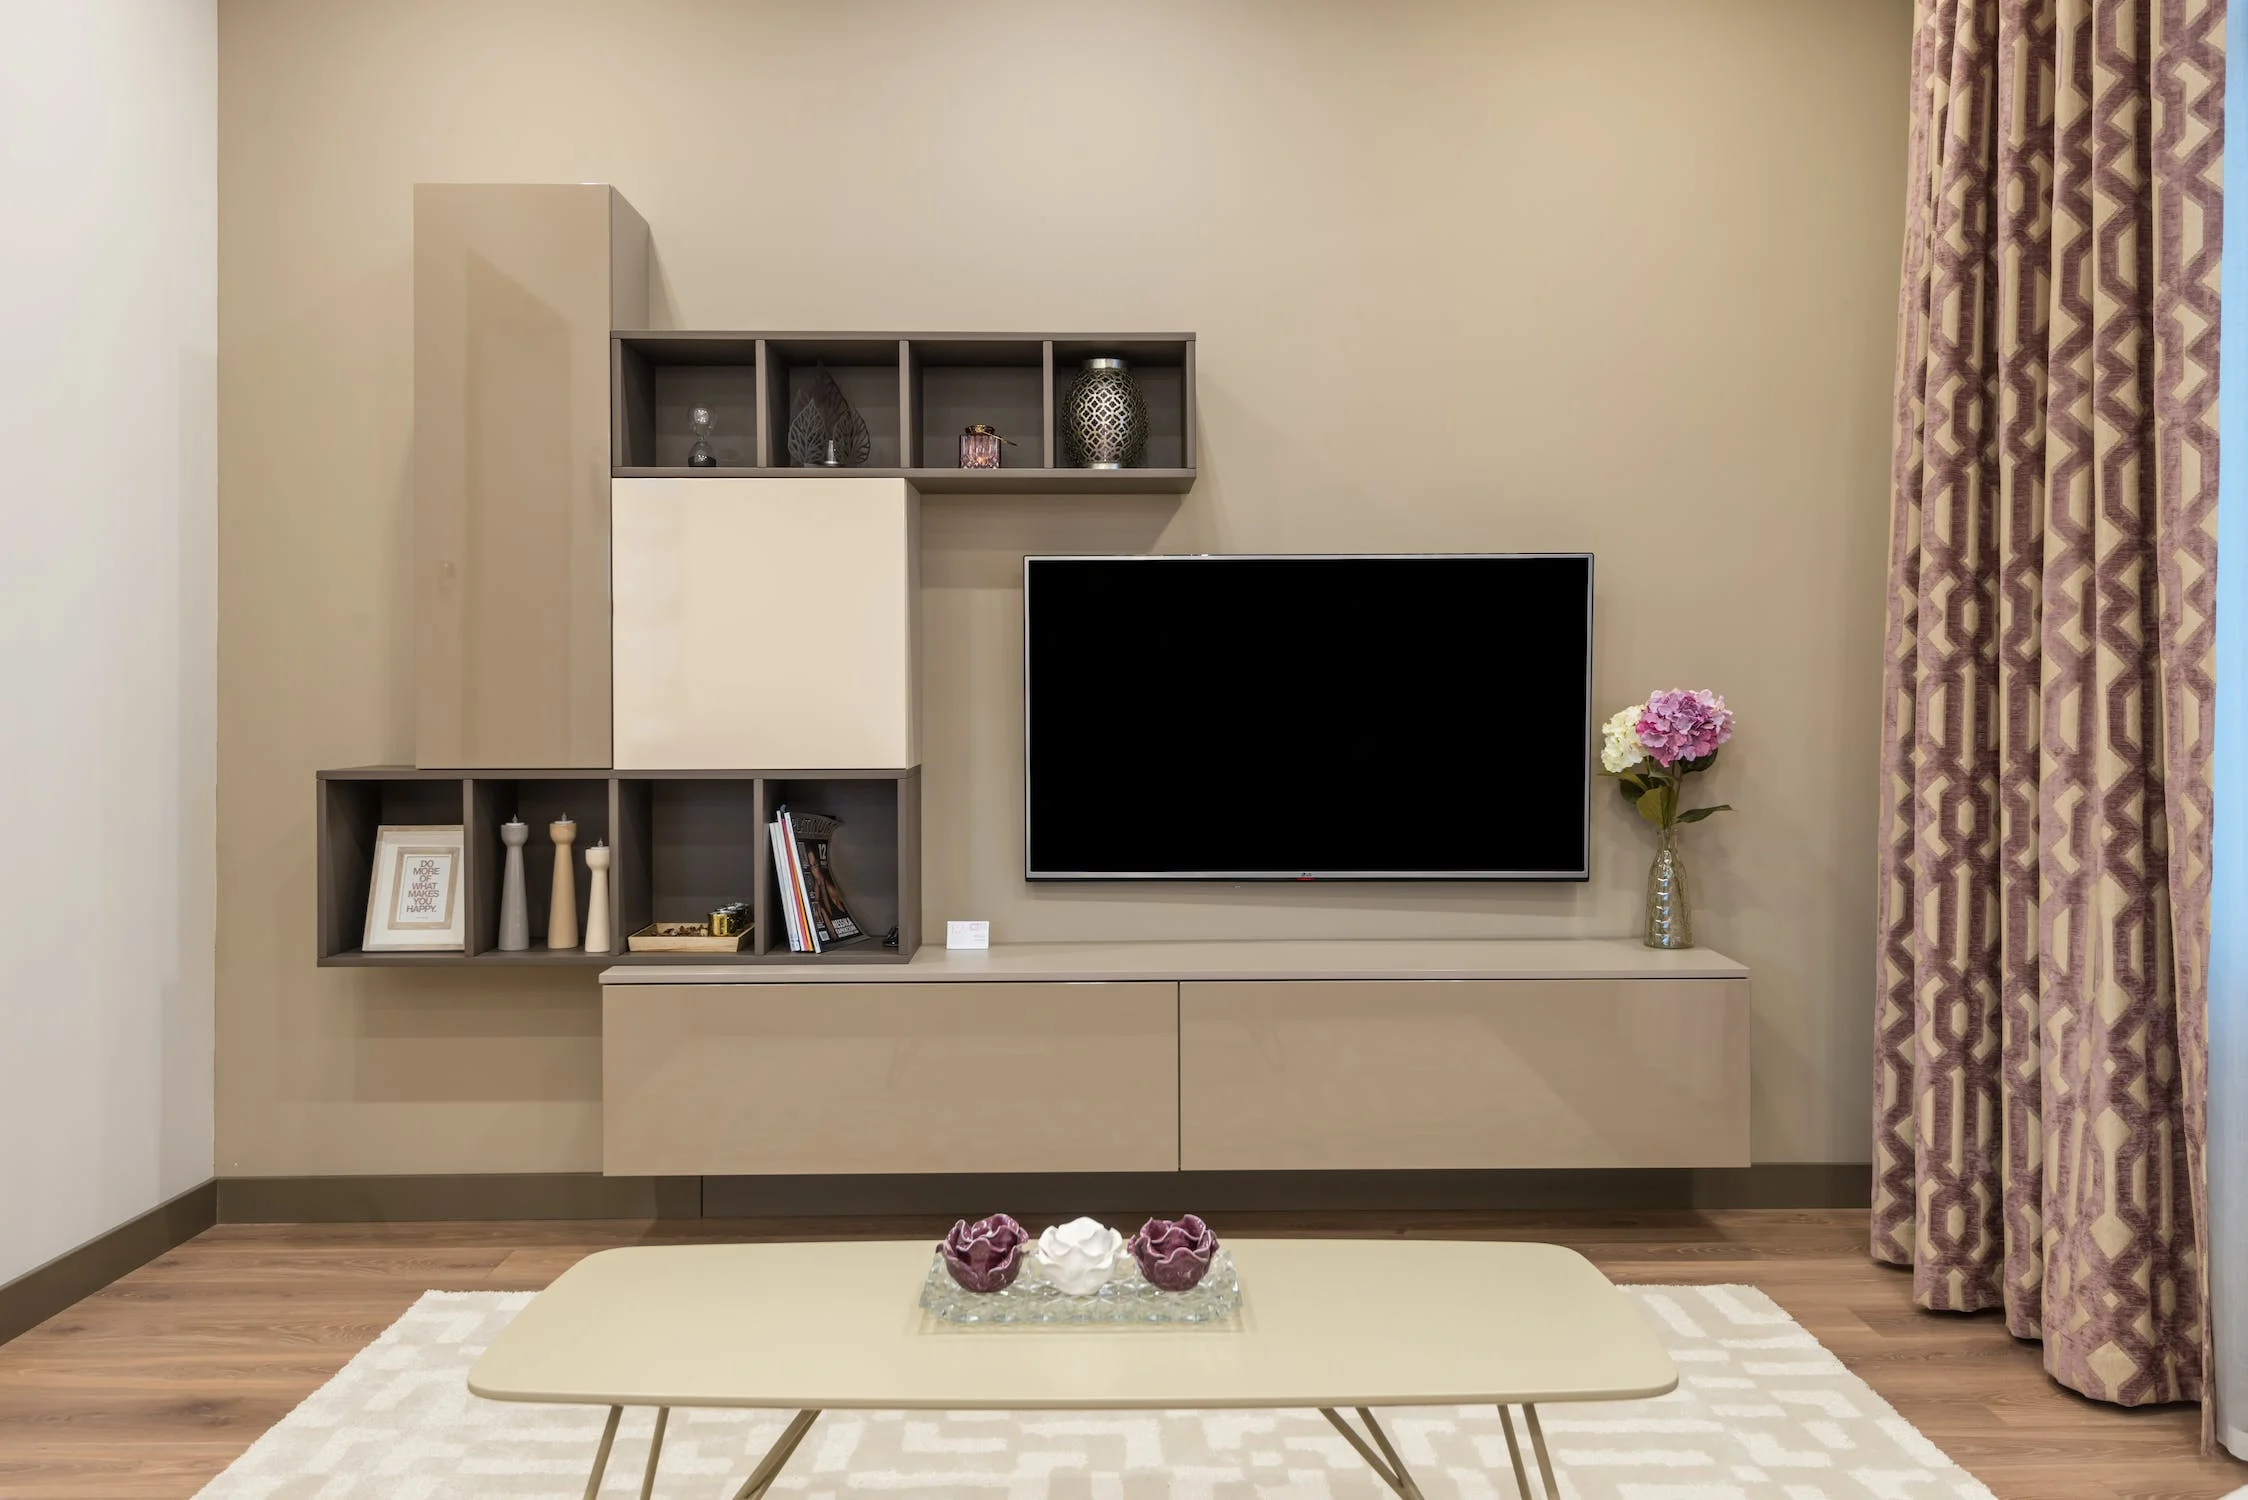 Stylish & Functional Wooden TV Cabinet Design Ideas